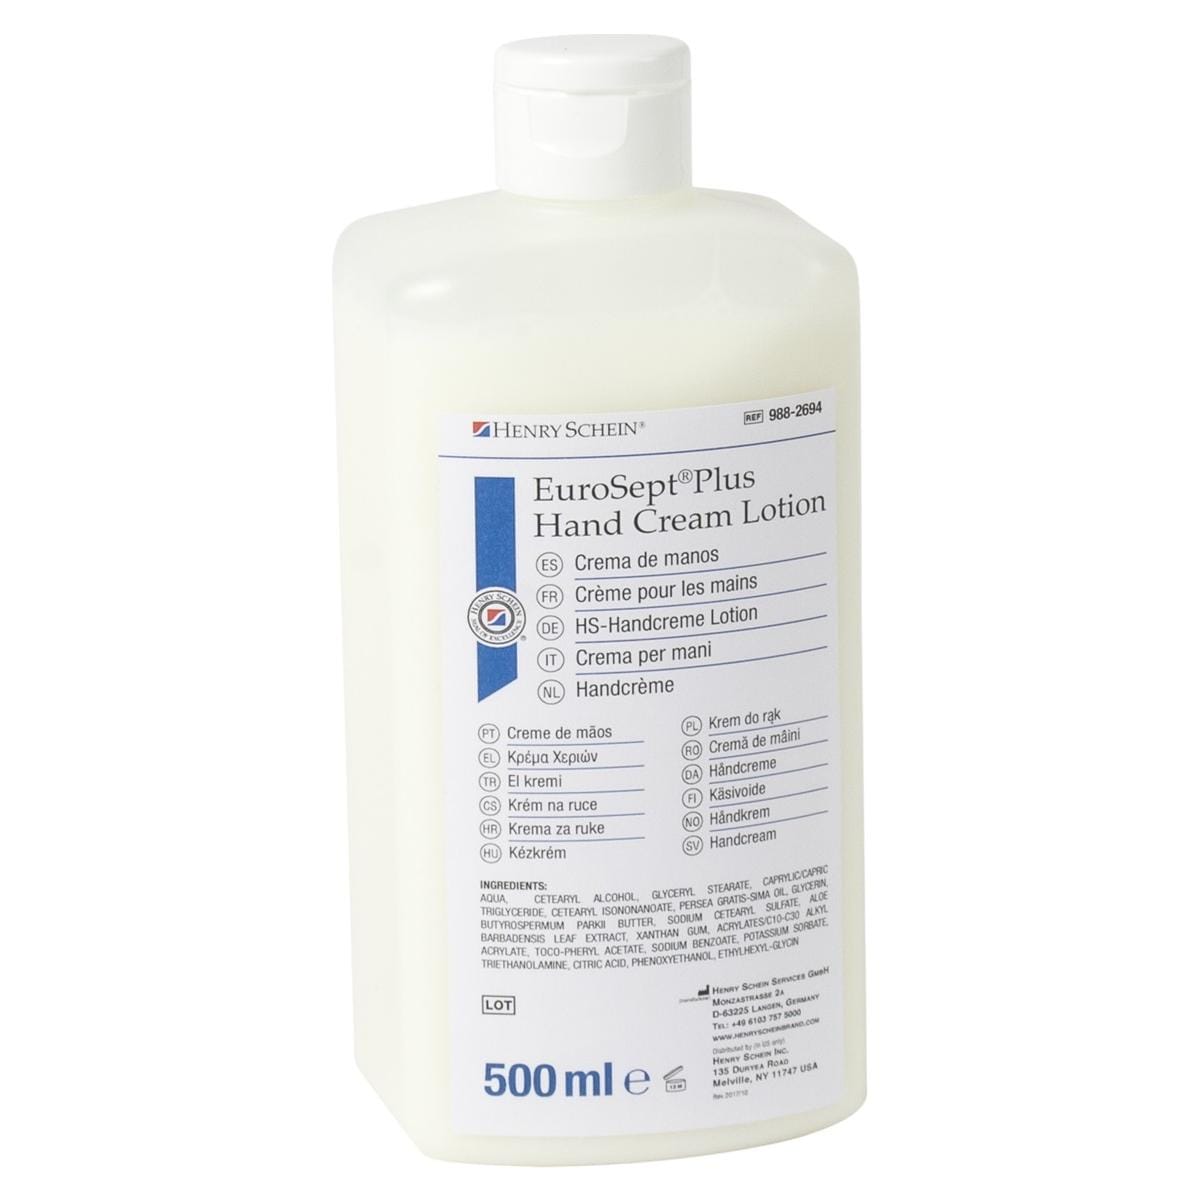 HS-Handcreme Lotion EuroSept® Plus, Hand Cream Lotion - Flasche 500 ml